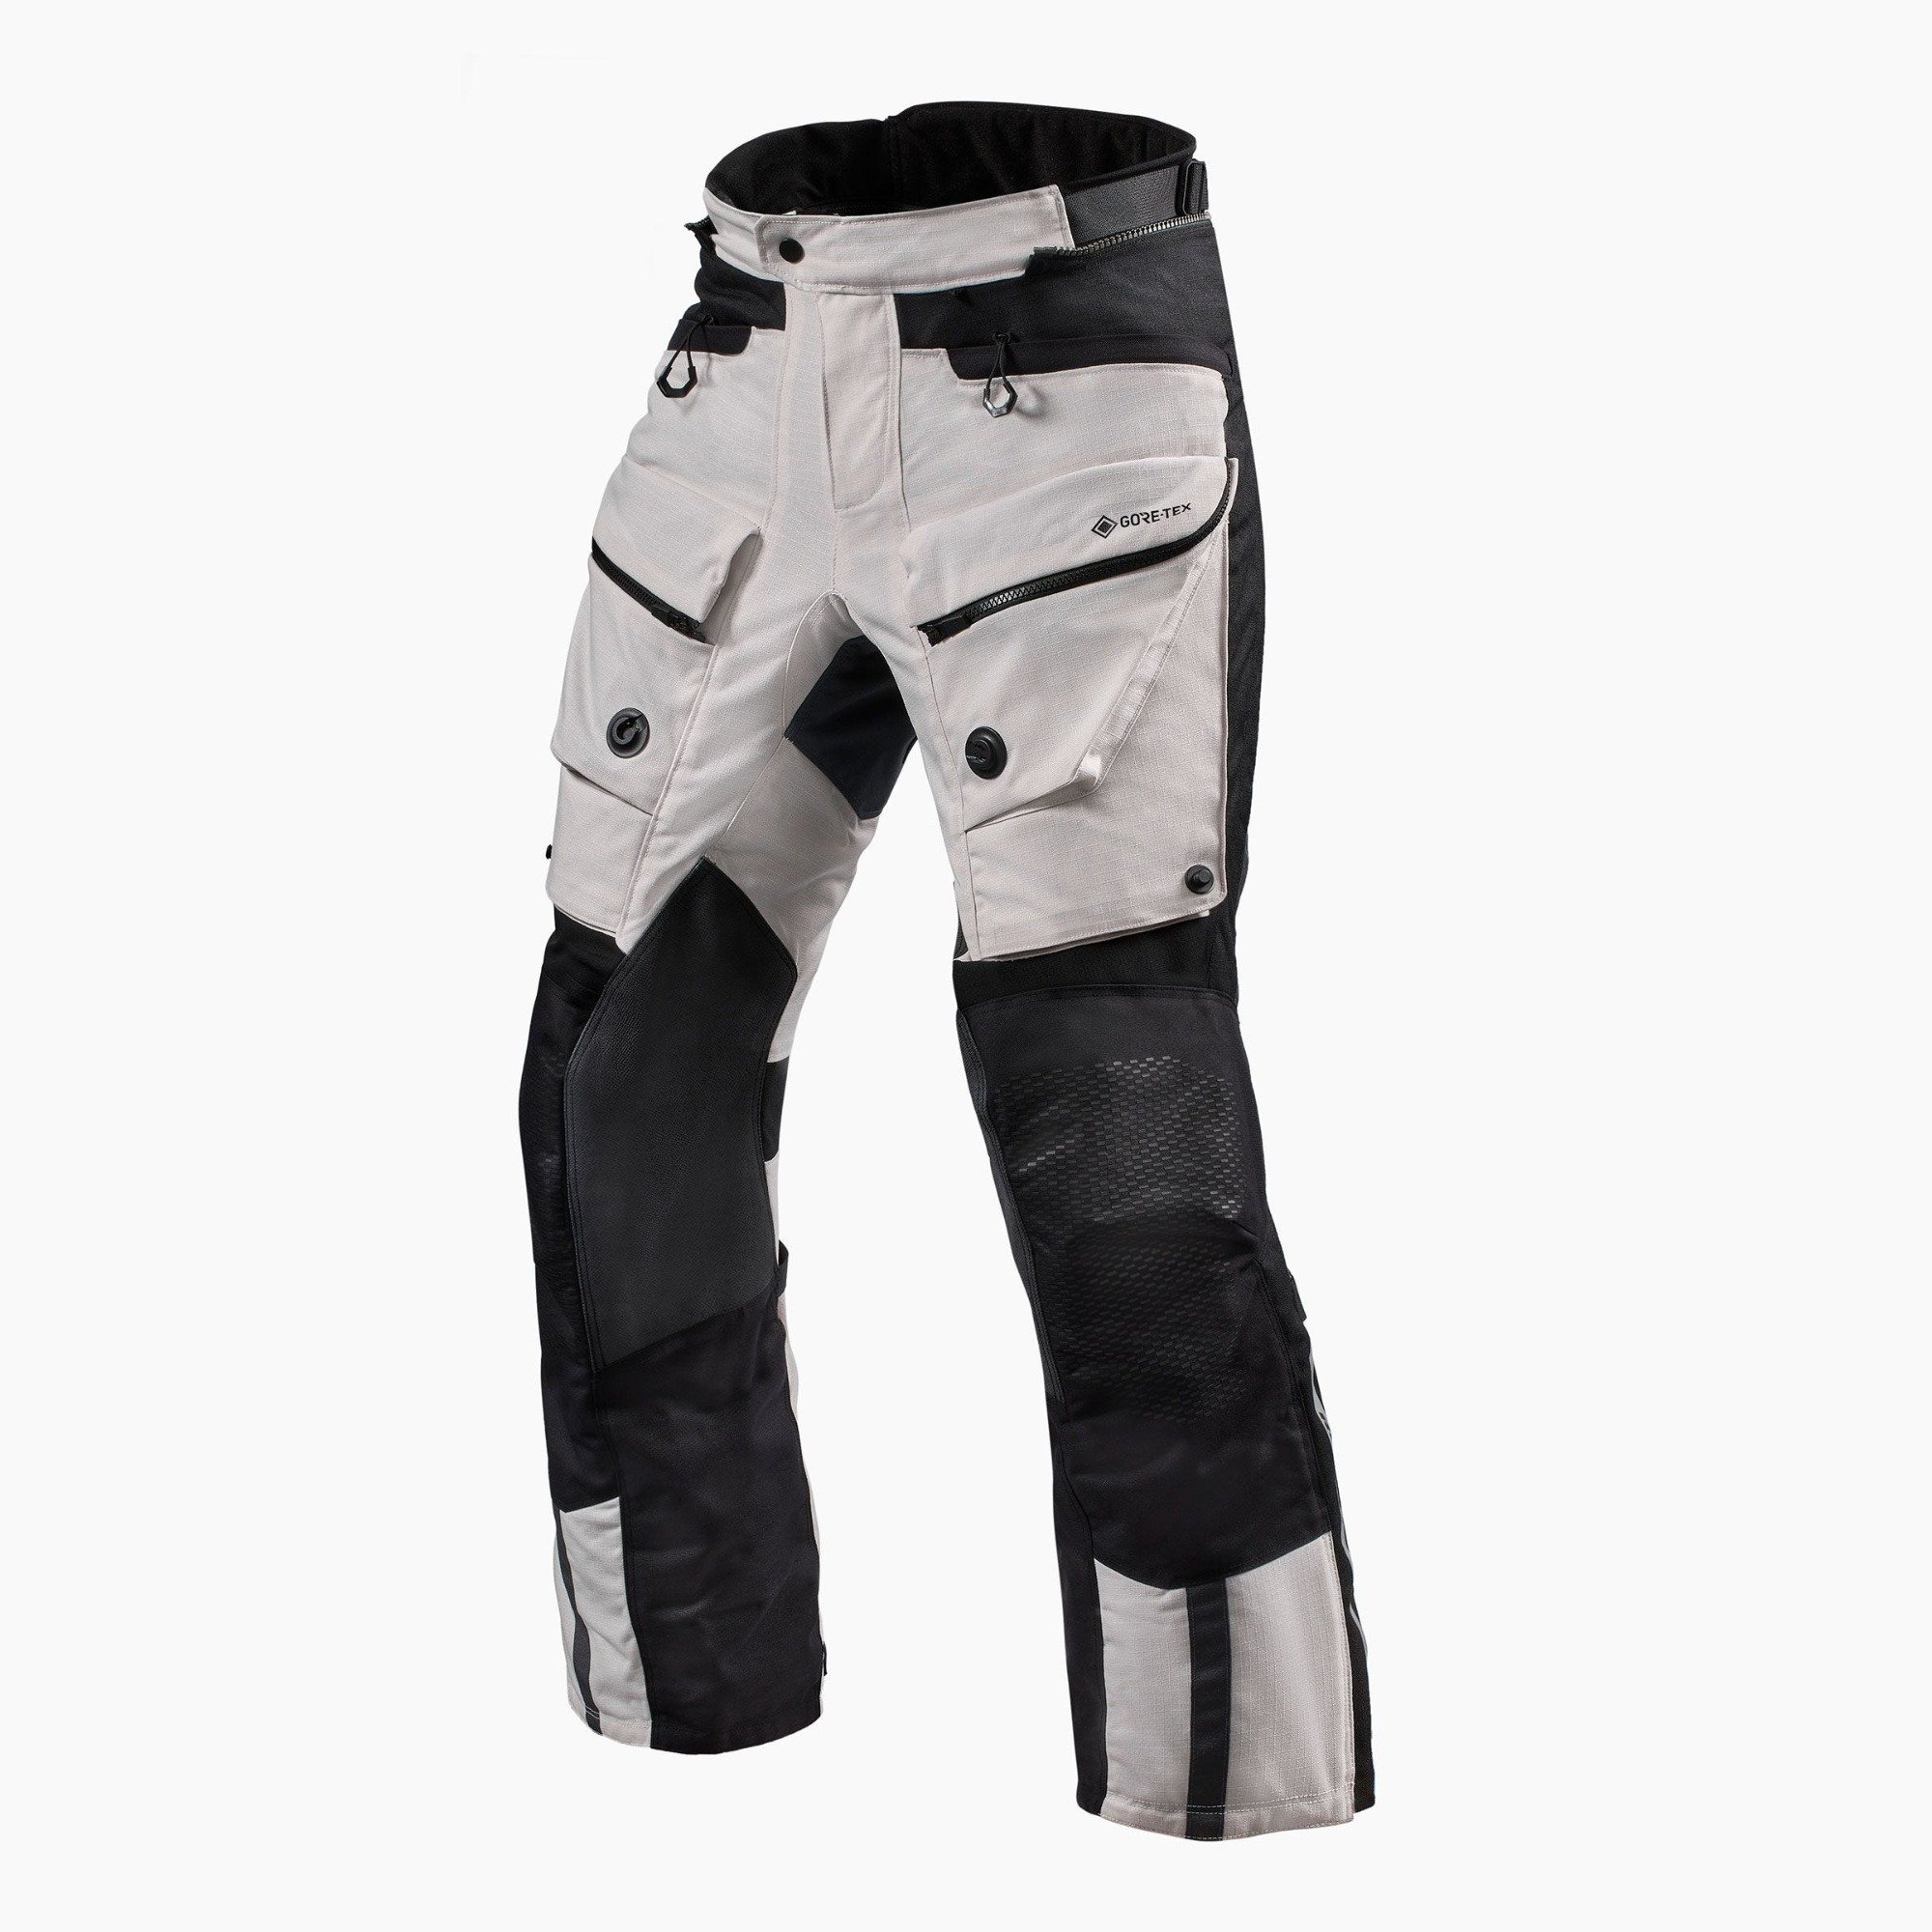 Image of REV'IT! Trousers Defender 3 GTX Silver Black Standard Motorcycle Pants Size S EN